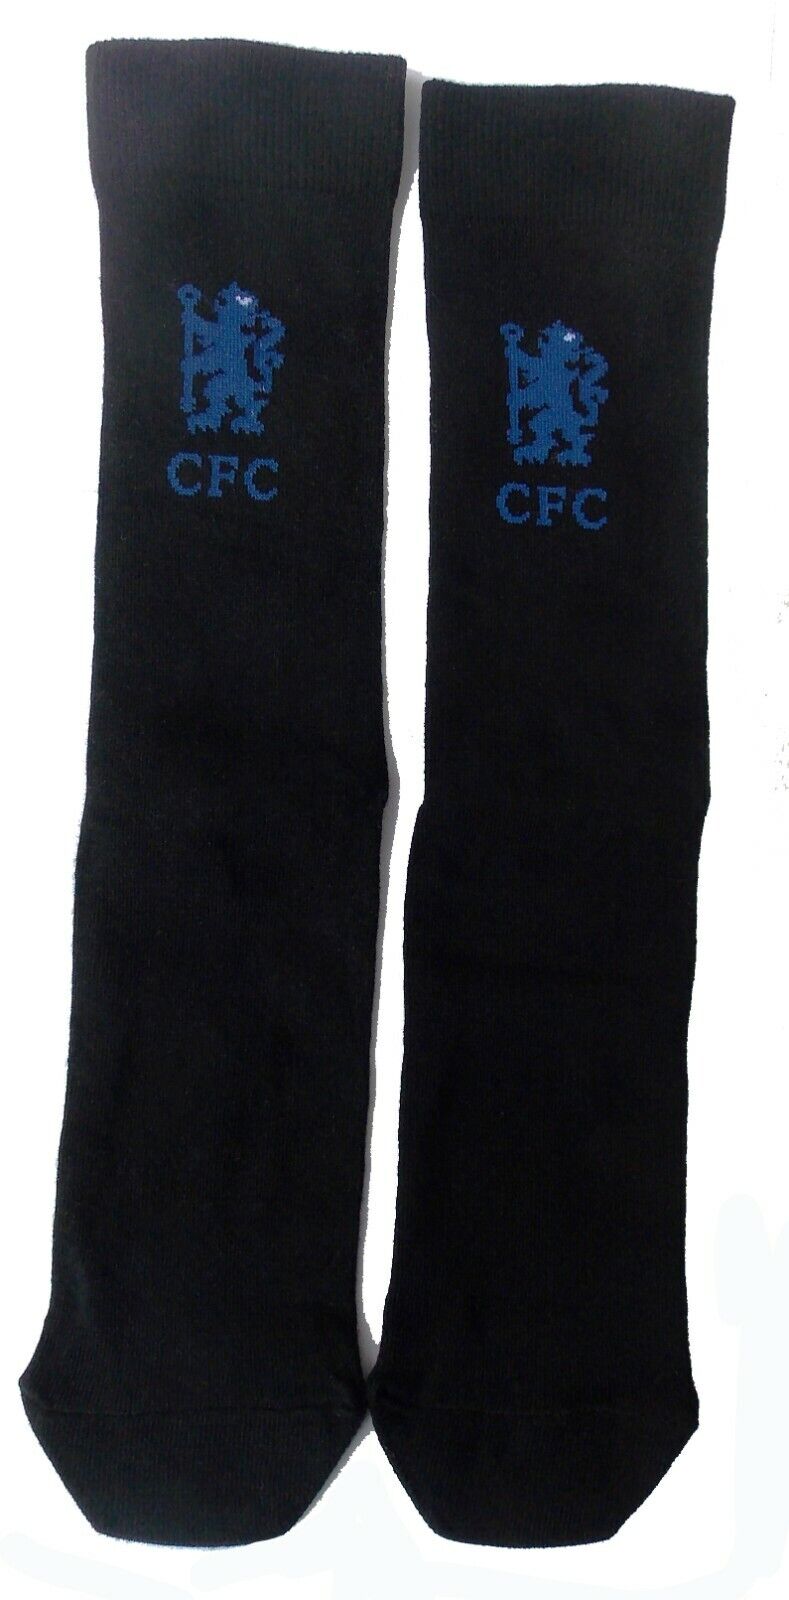 Chelsea FC Logo Socks - Black -Size 8-11. Polycotton